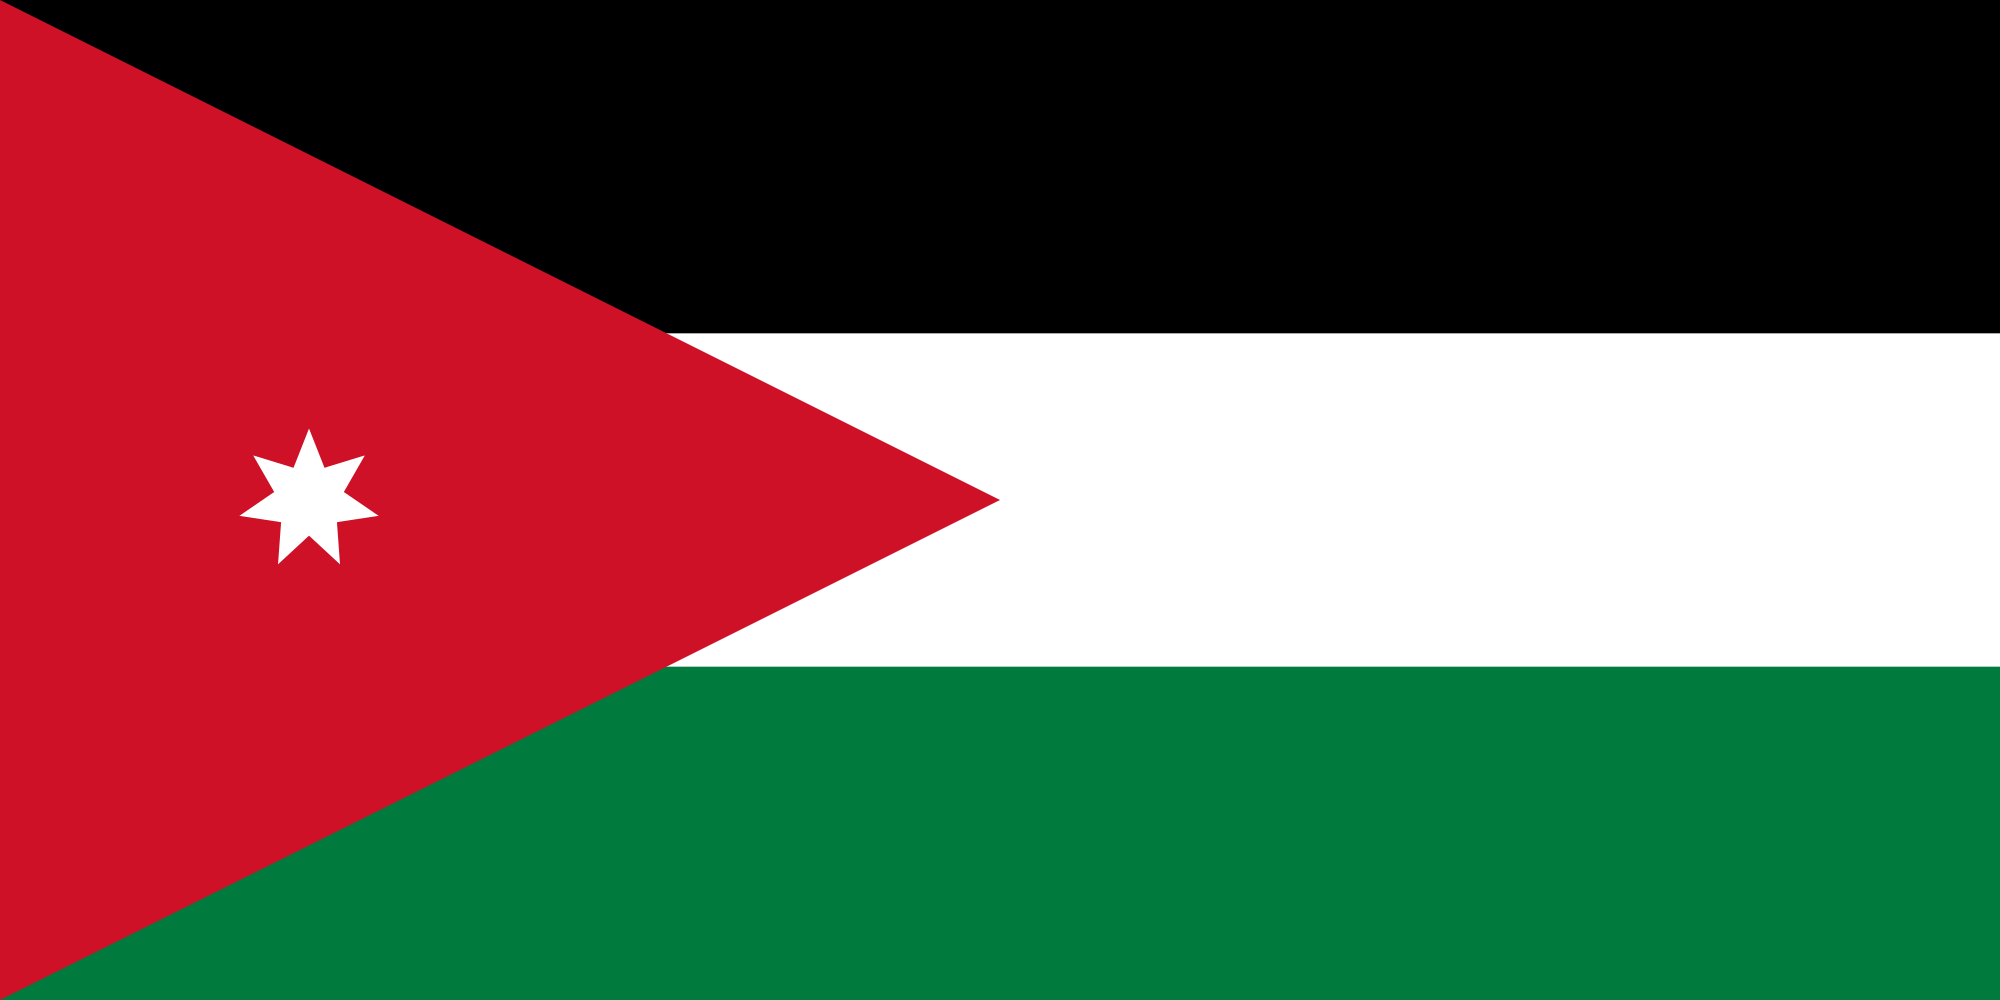 https://upload.wikimedia.org/wikipedia/commons/thumb/c/c0/Flag_of_Jordan.svg/2000px-Flag_of_Jordan.svg.png